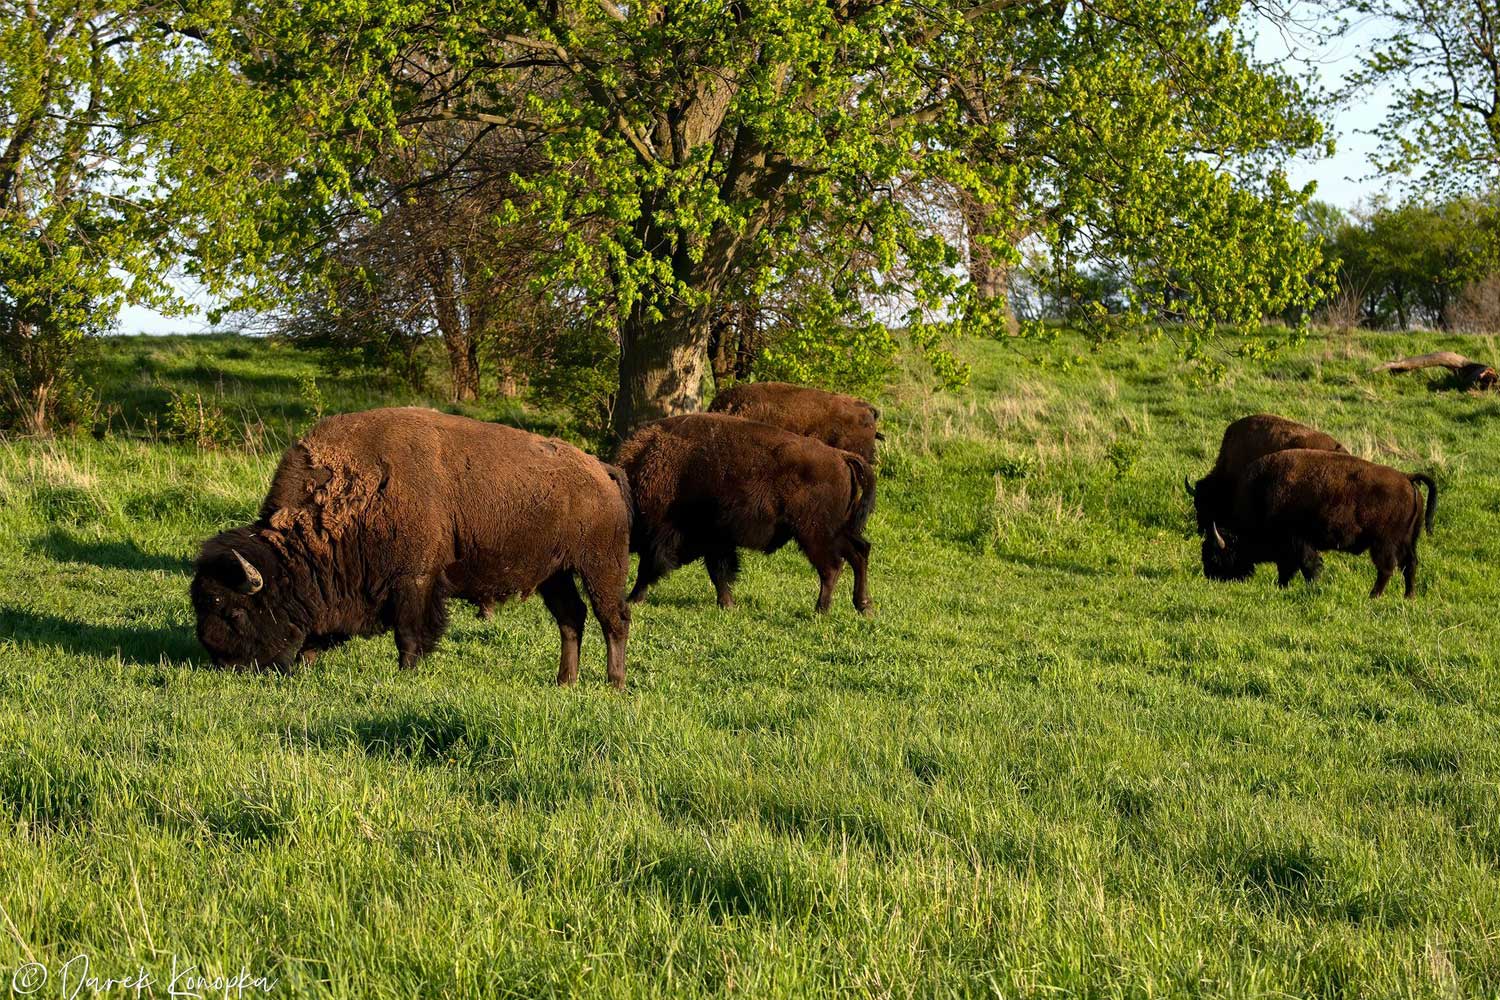 Bison on the prairie